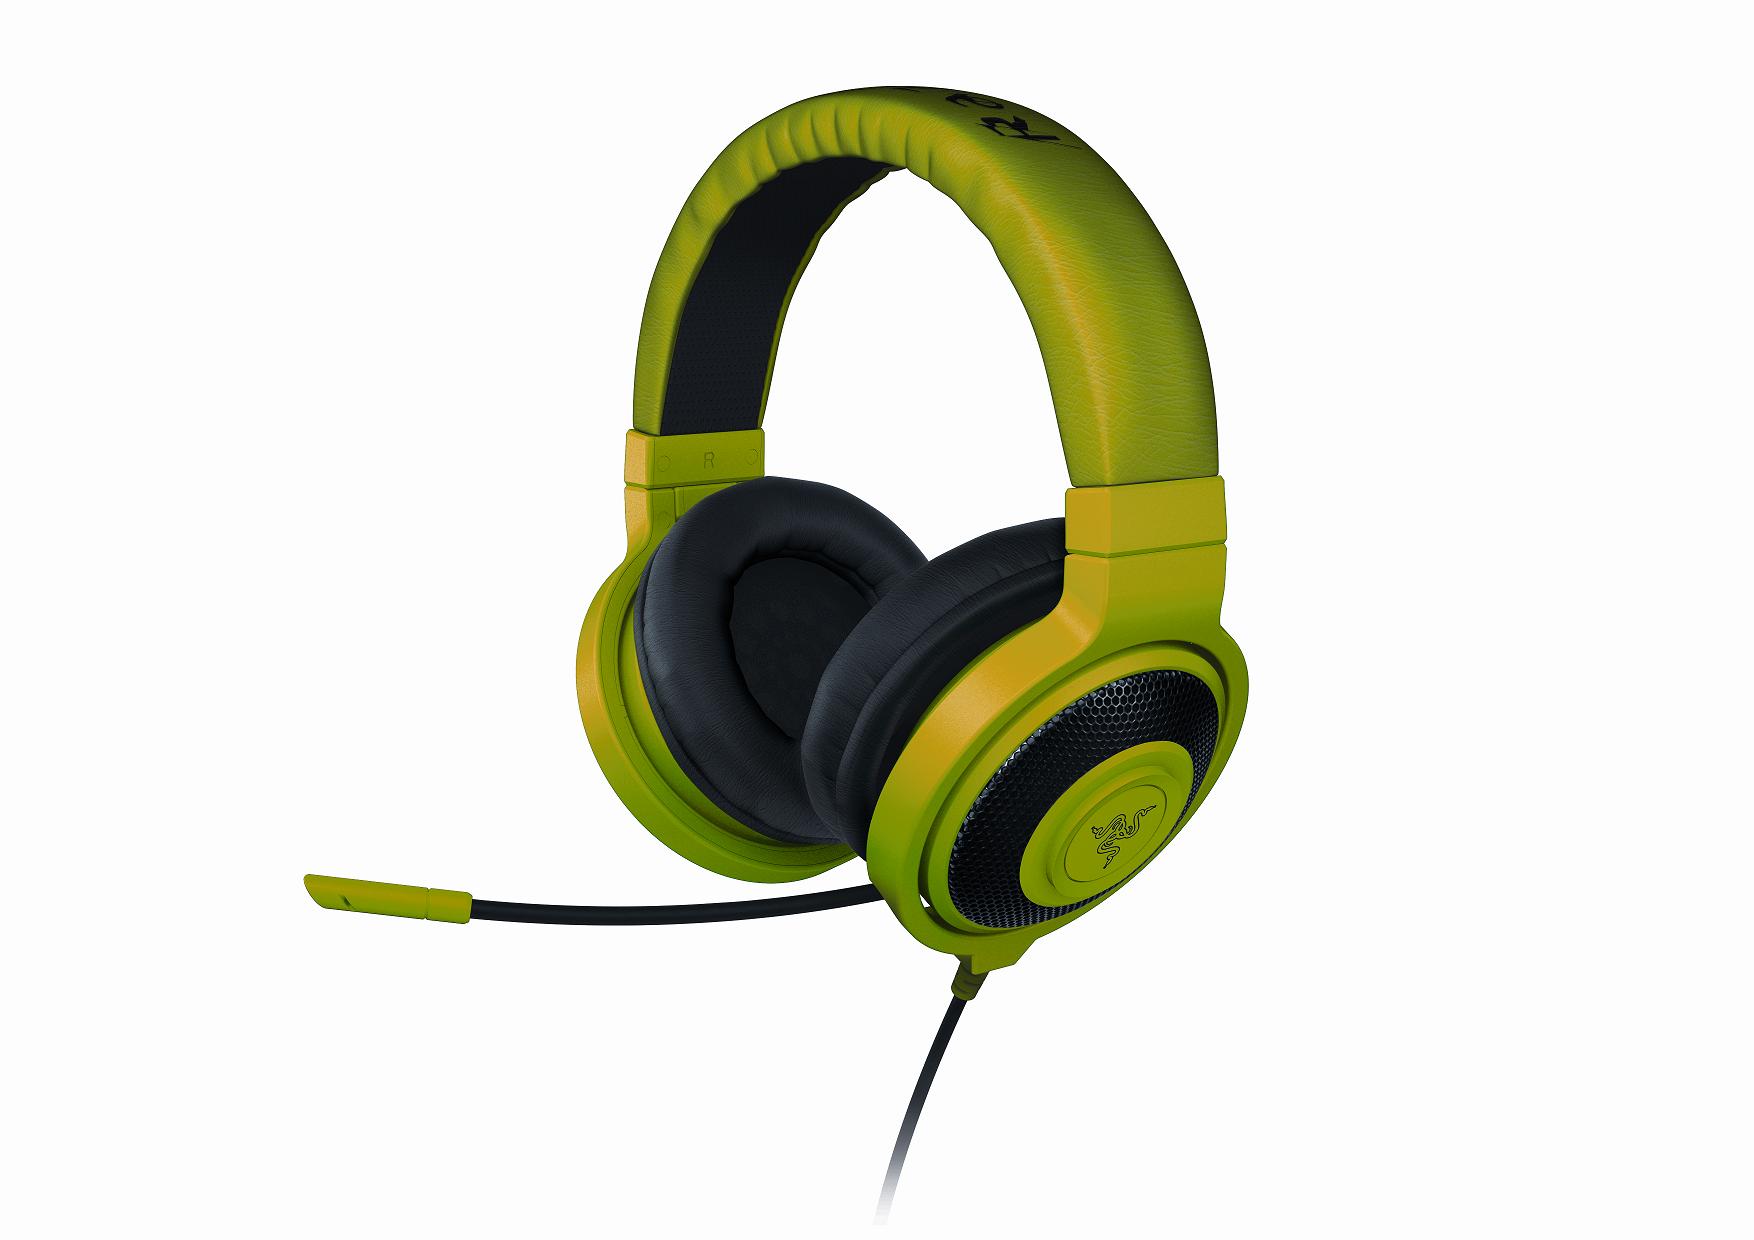 Razer Unveils Kraken Pro Gaming Headset and Kraken Music & Gaming Headphones